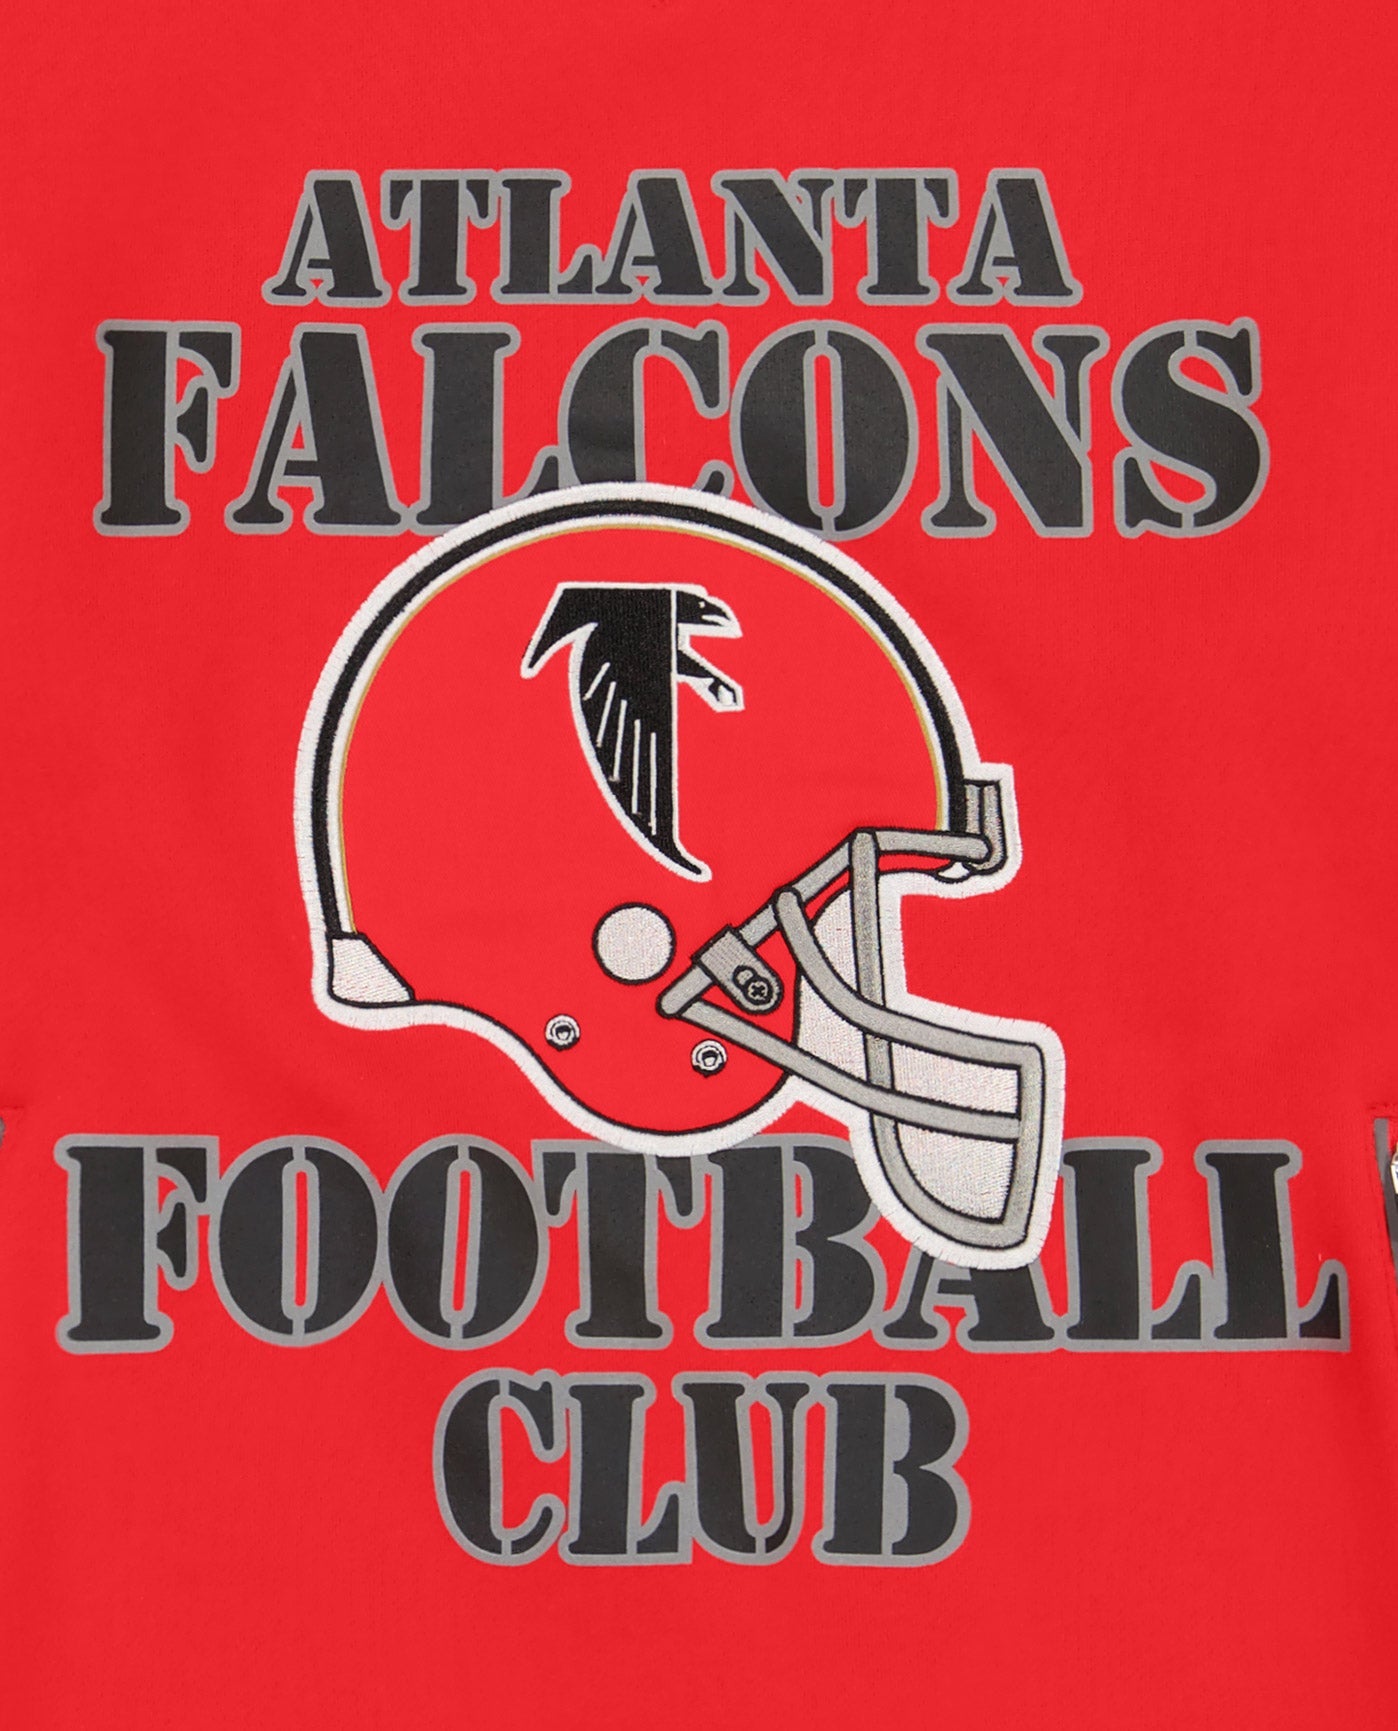 ATLANTA FALCONS FOOTBALL CLUB writing and helmet logo front | Falcons Red